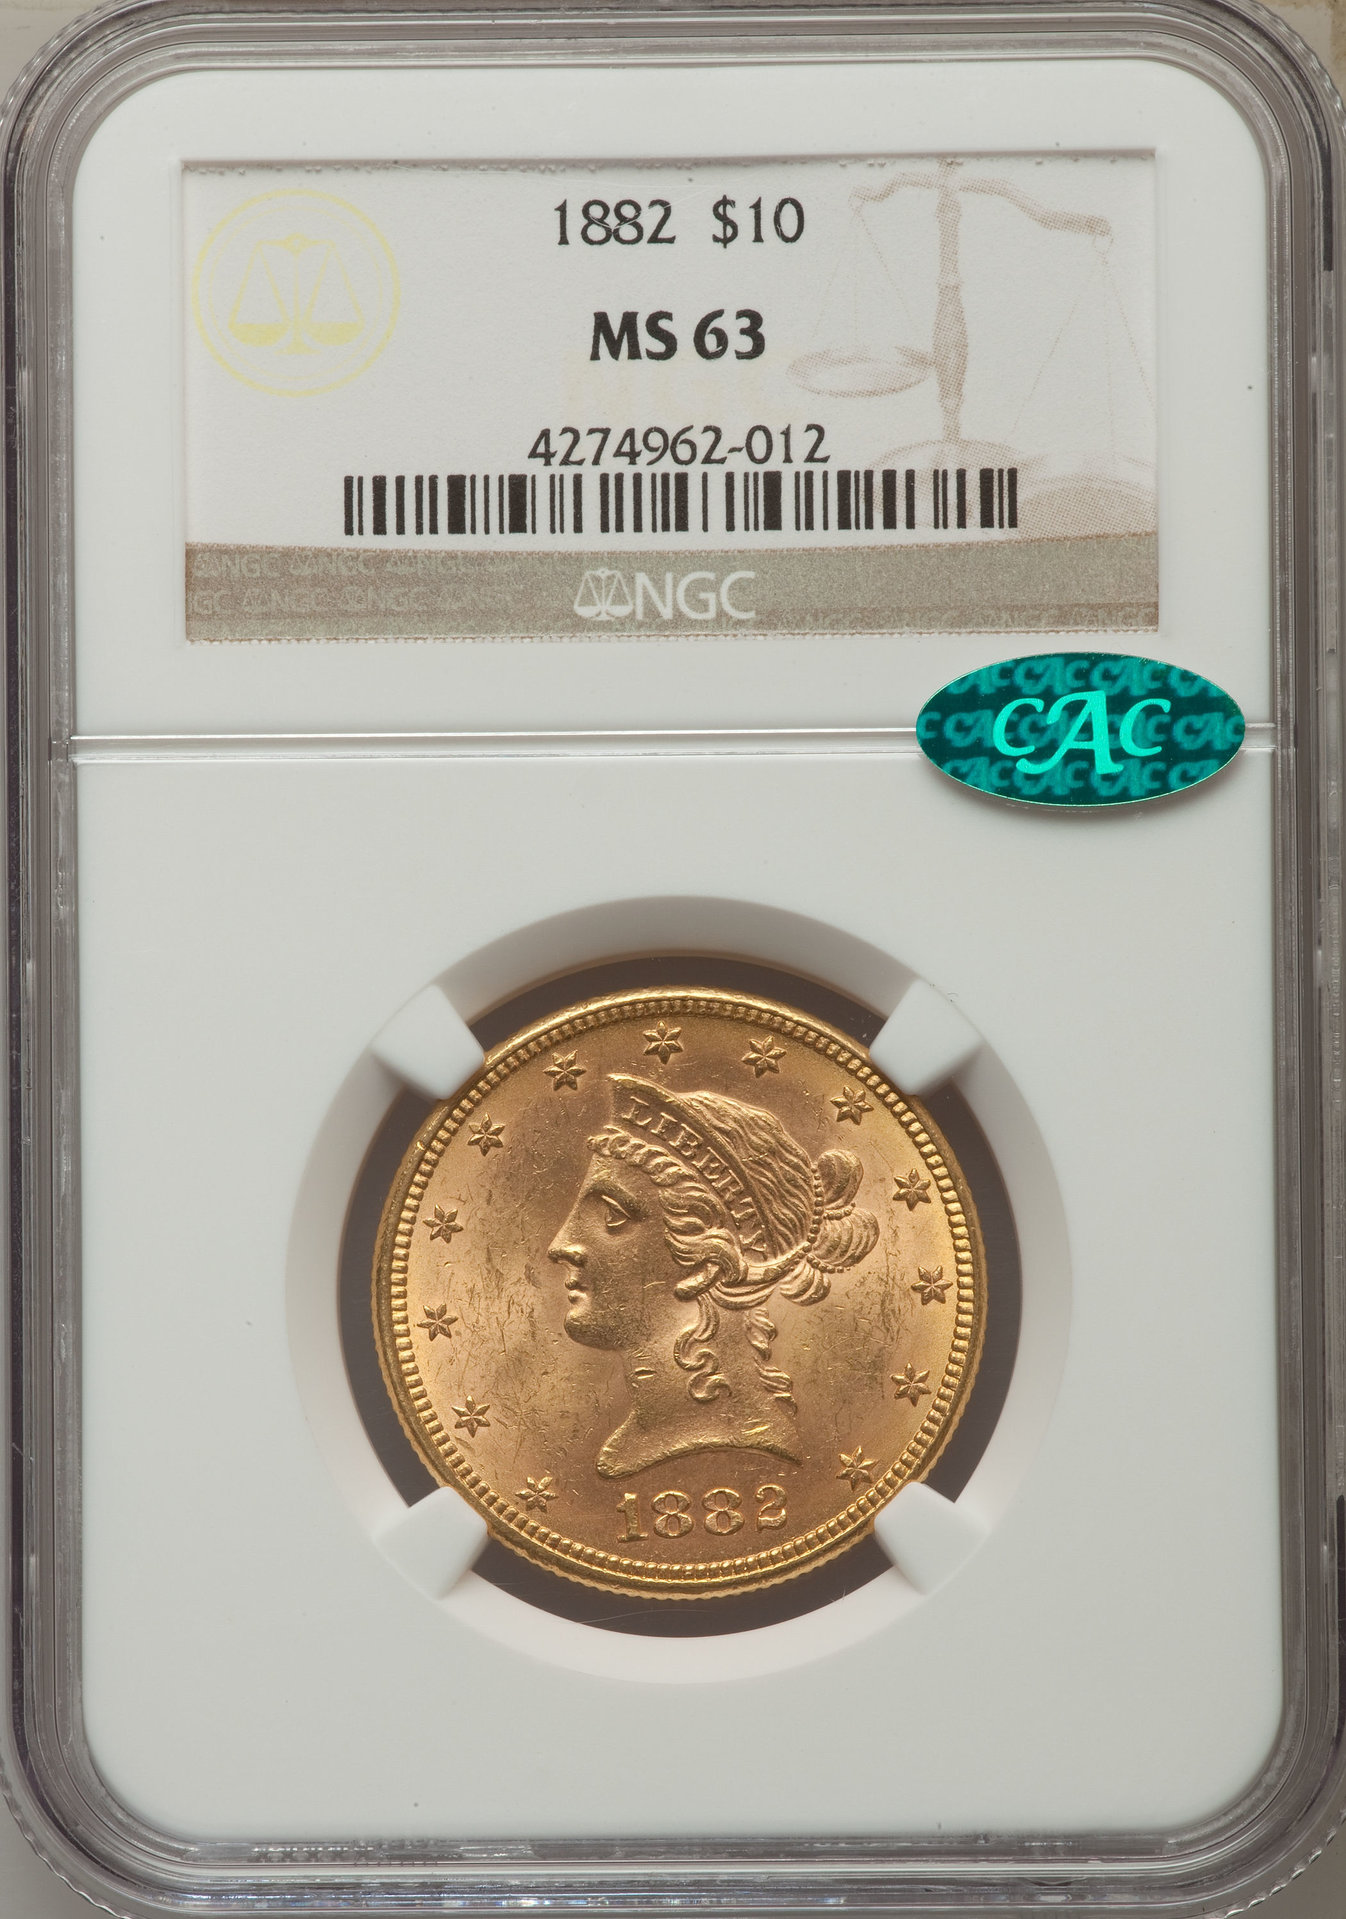 1882 MS63 CAC $10 Liberty obv.jpg